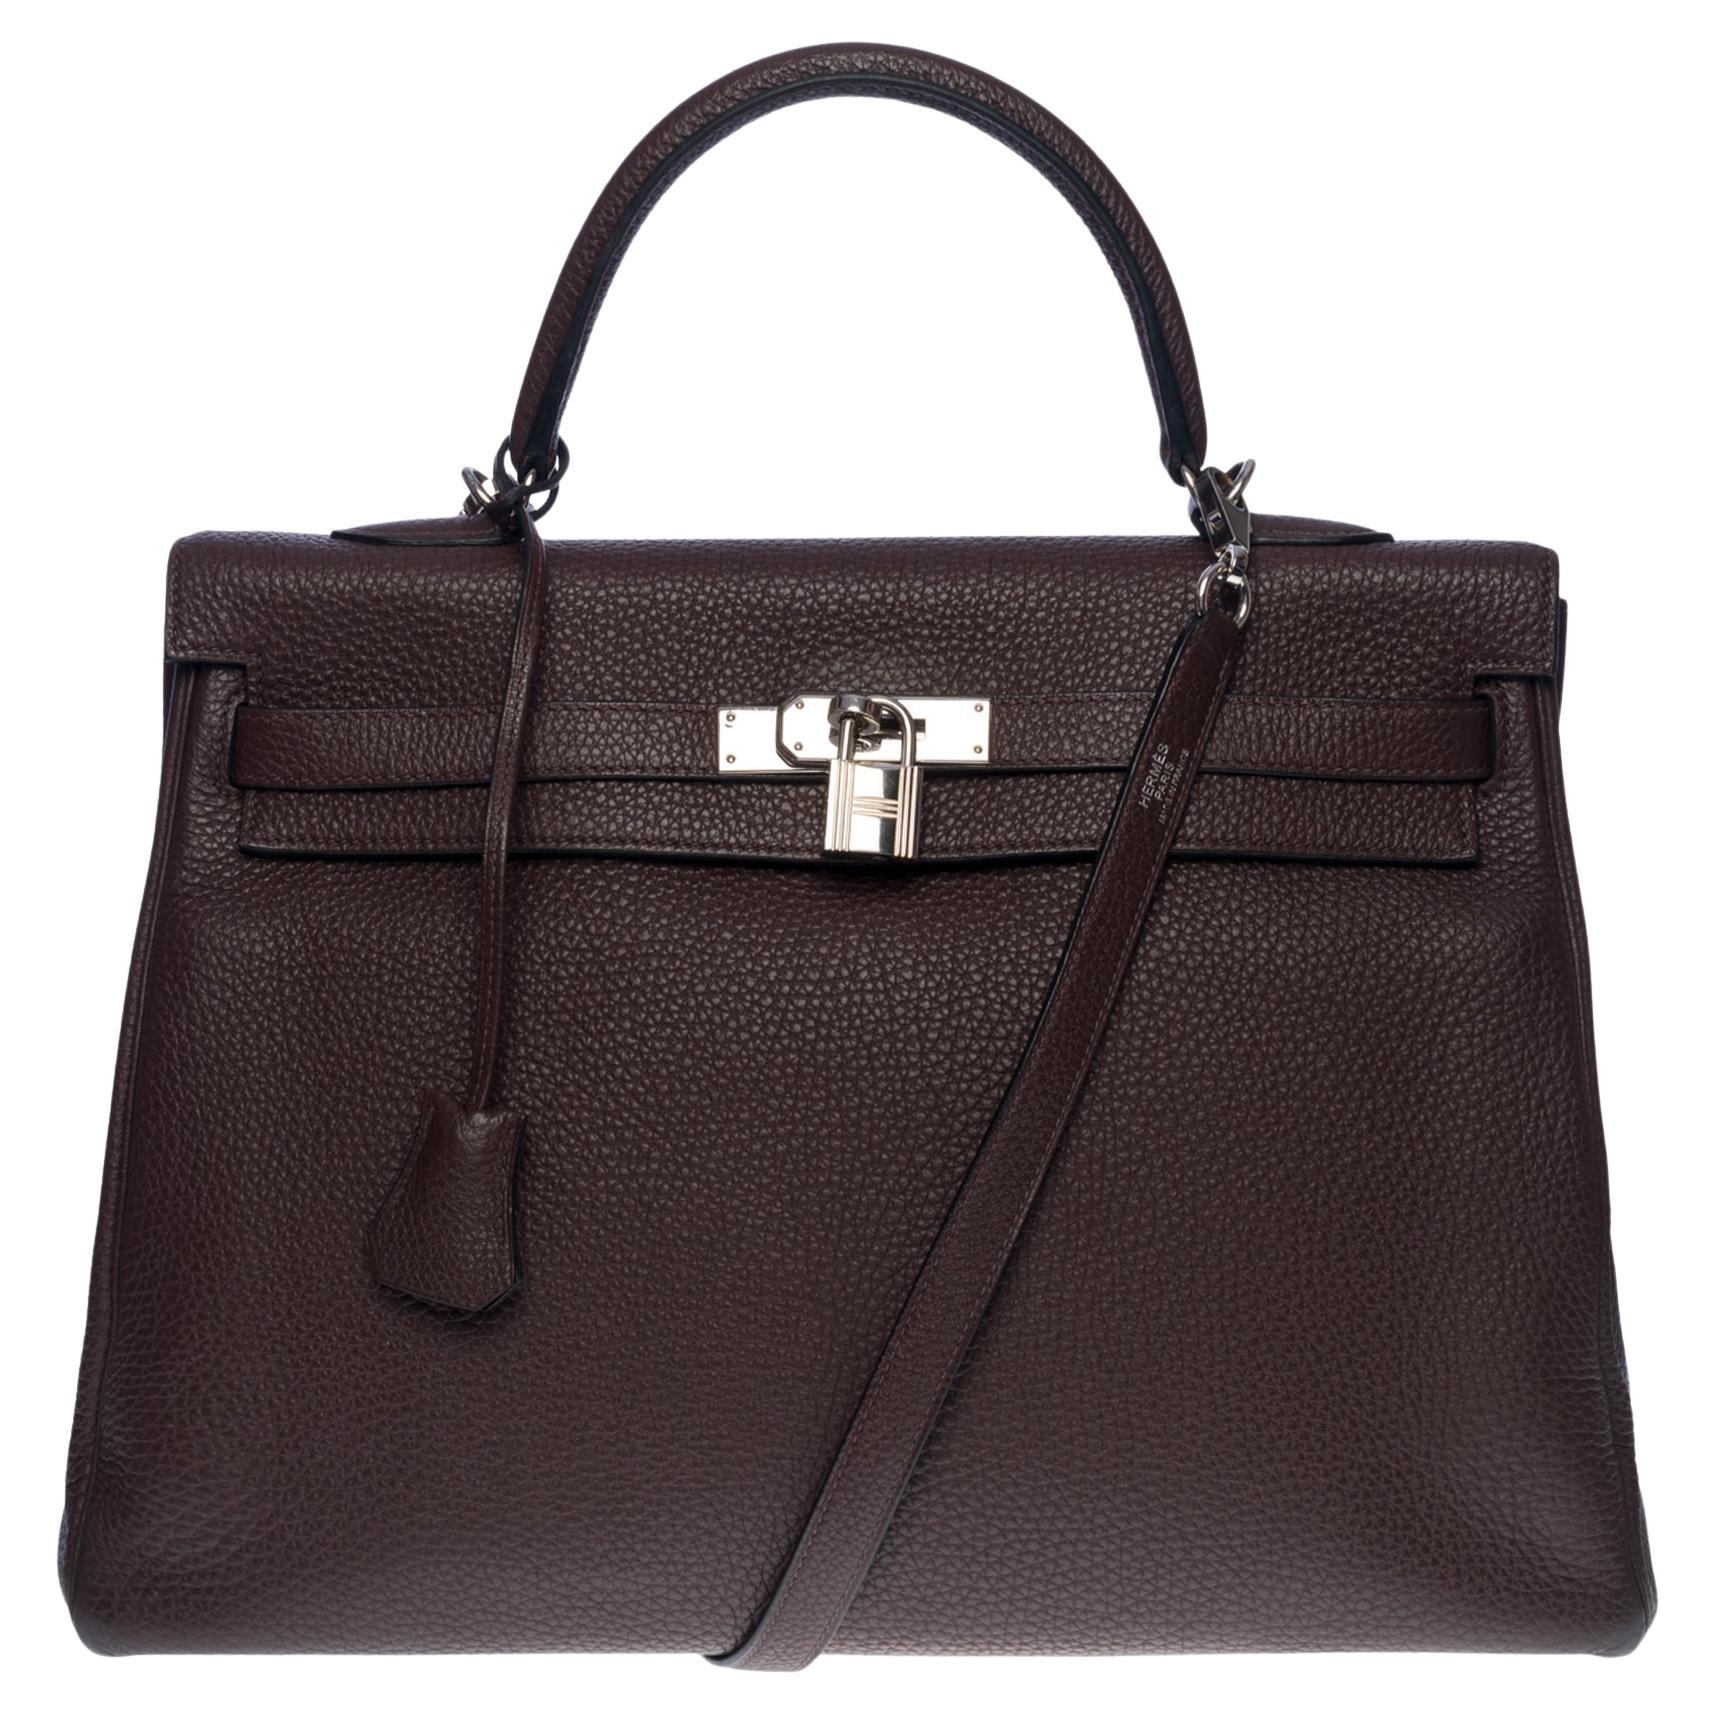 Hermès Kelly 35 retourne handbag strap in Brown Togo leather , Silver hardware